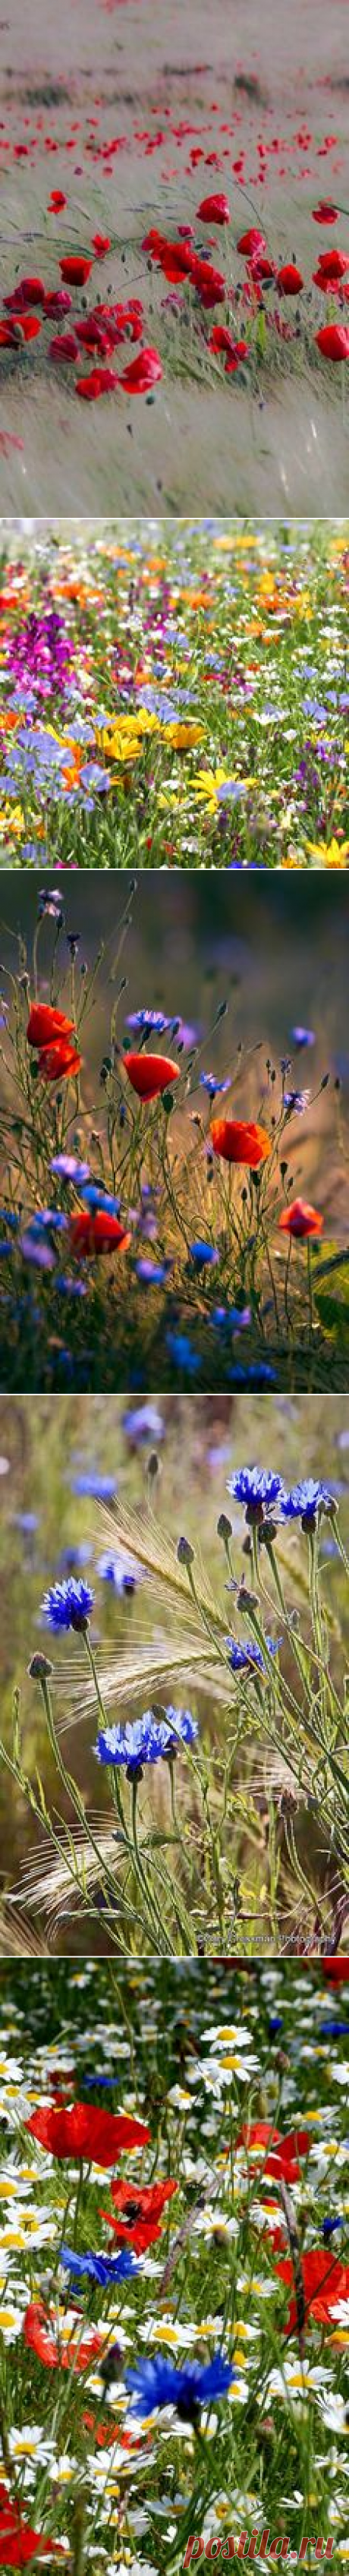 (1077) Wildflowers | Strange flowers